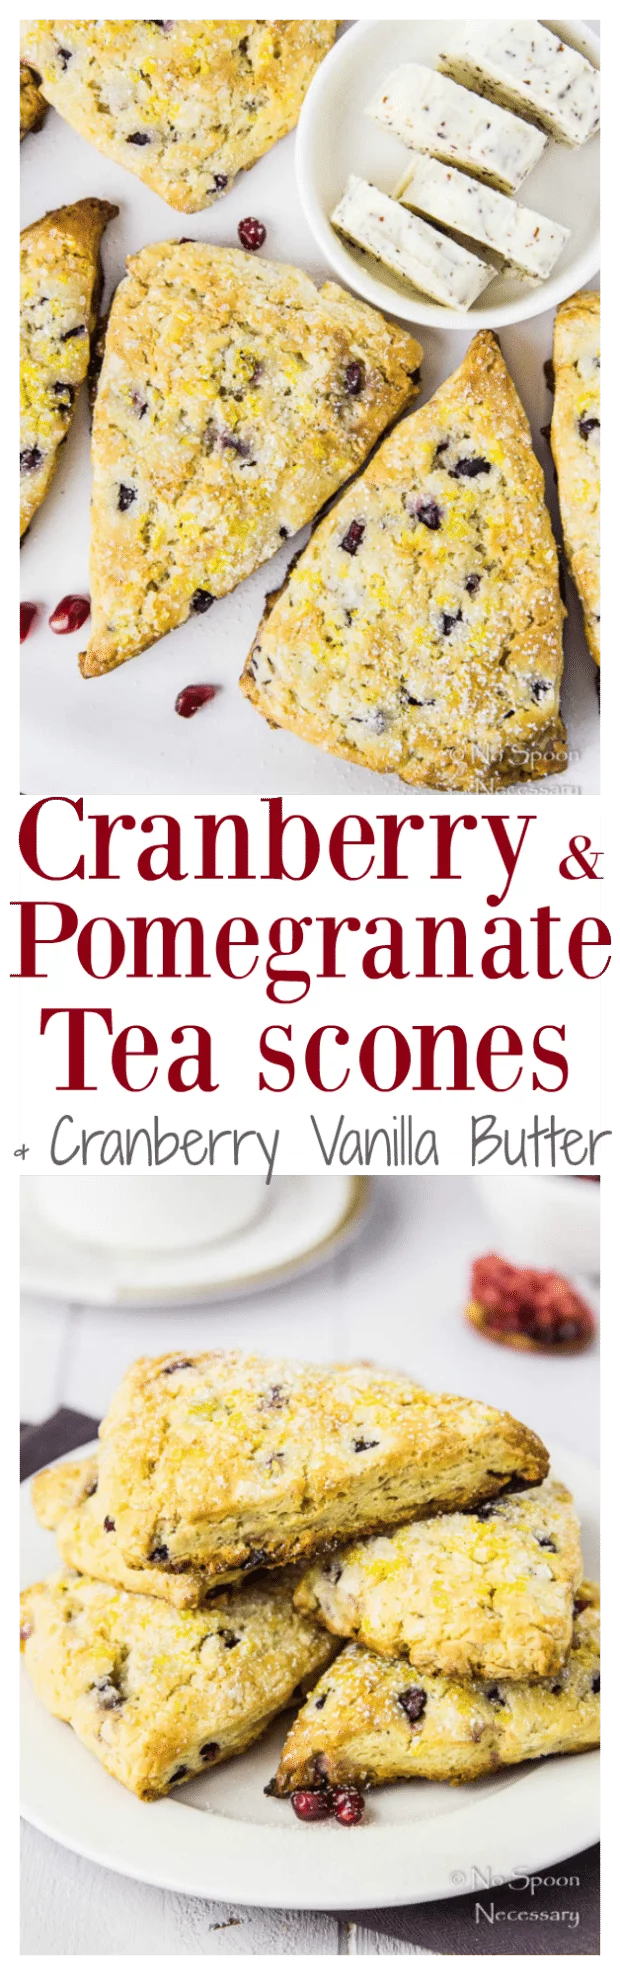 Cranberry & Pomegranate Tea Scones with Cranberry Vanilla Butter